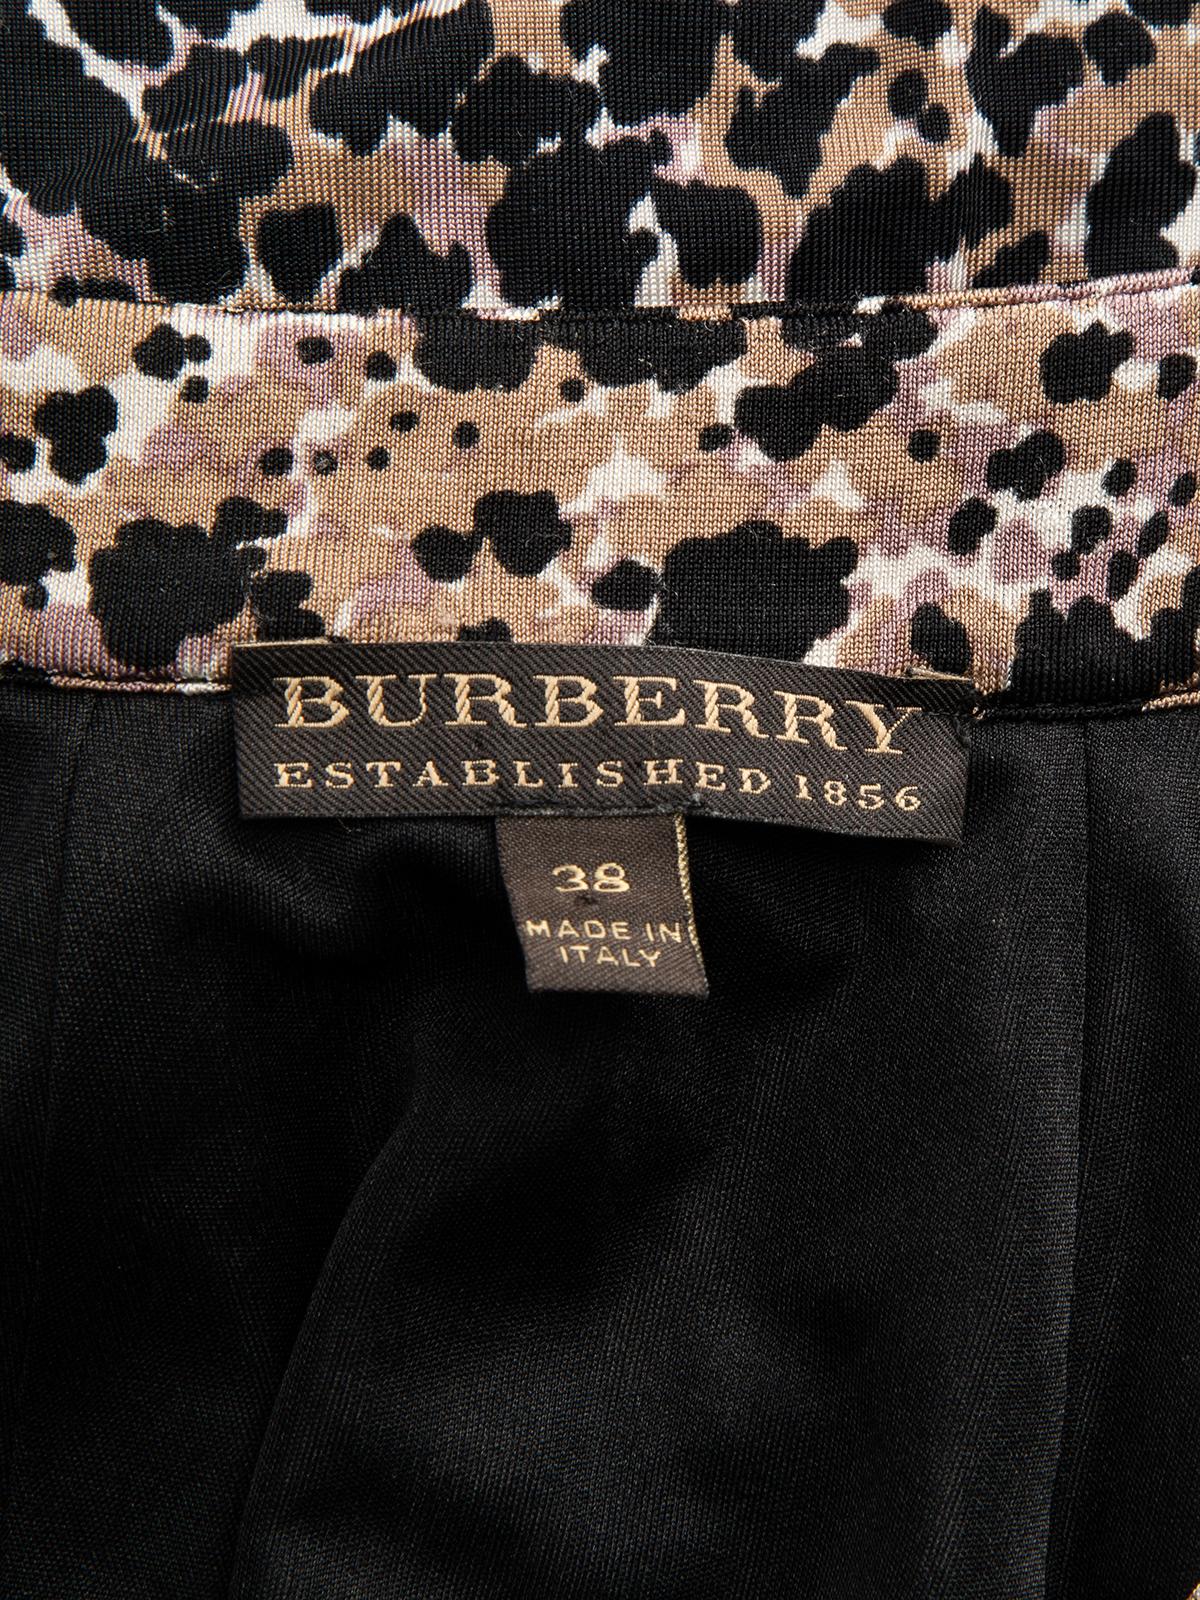 Pre-Loved Burberry Women's Leopard Print Patterned Dress For Sale 2